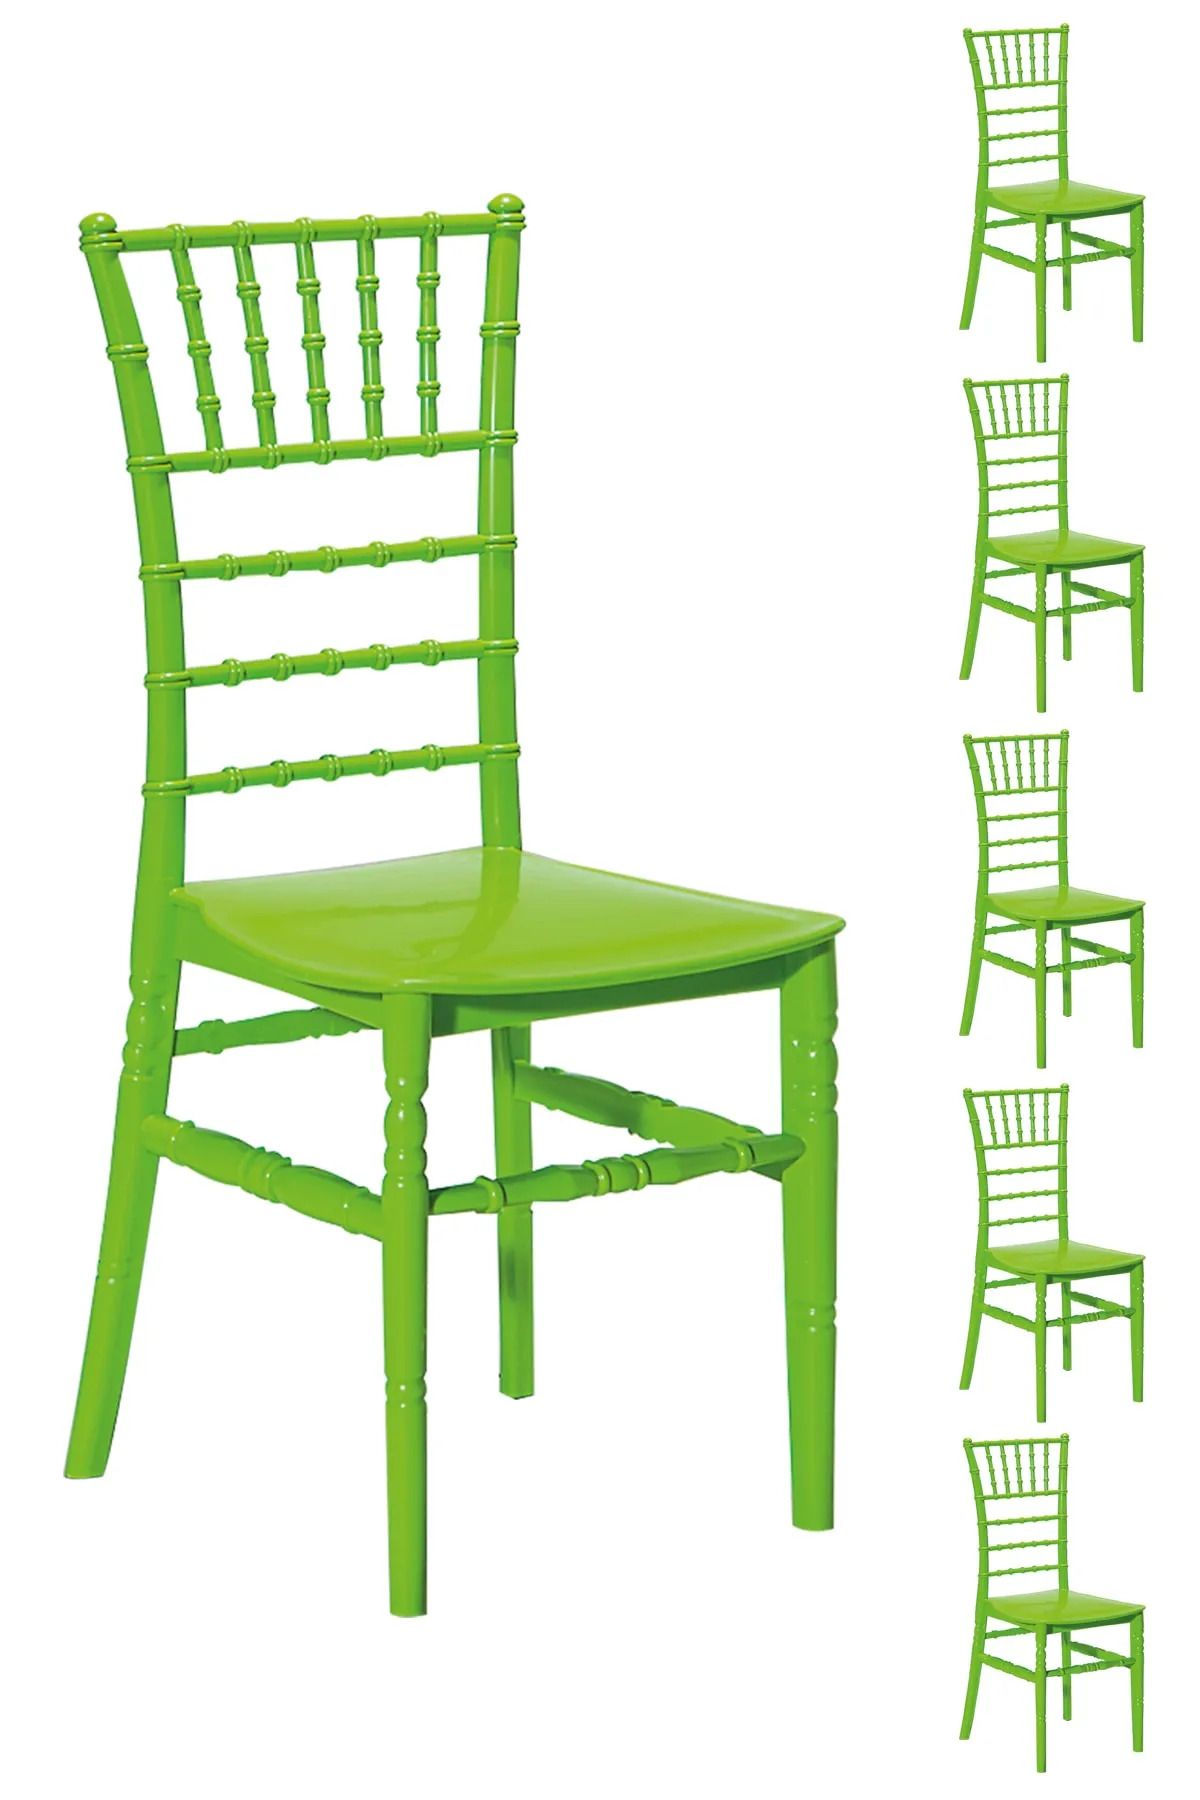 MOBETTO 6 Adet Soho Yeşil Sandalye / Balkon-bahçe-mutfak